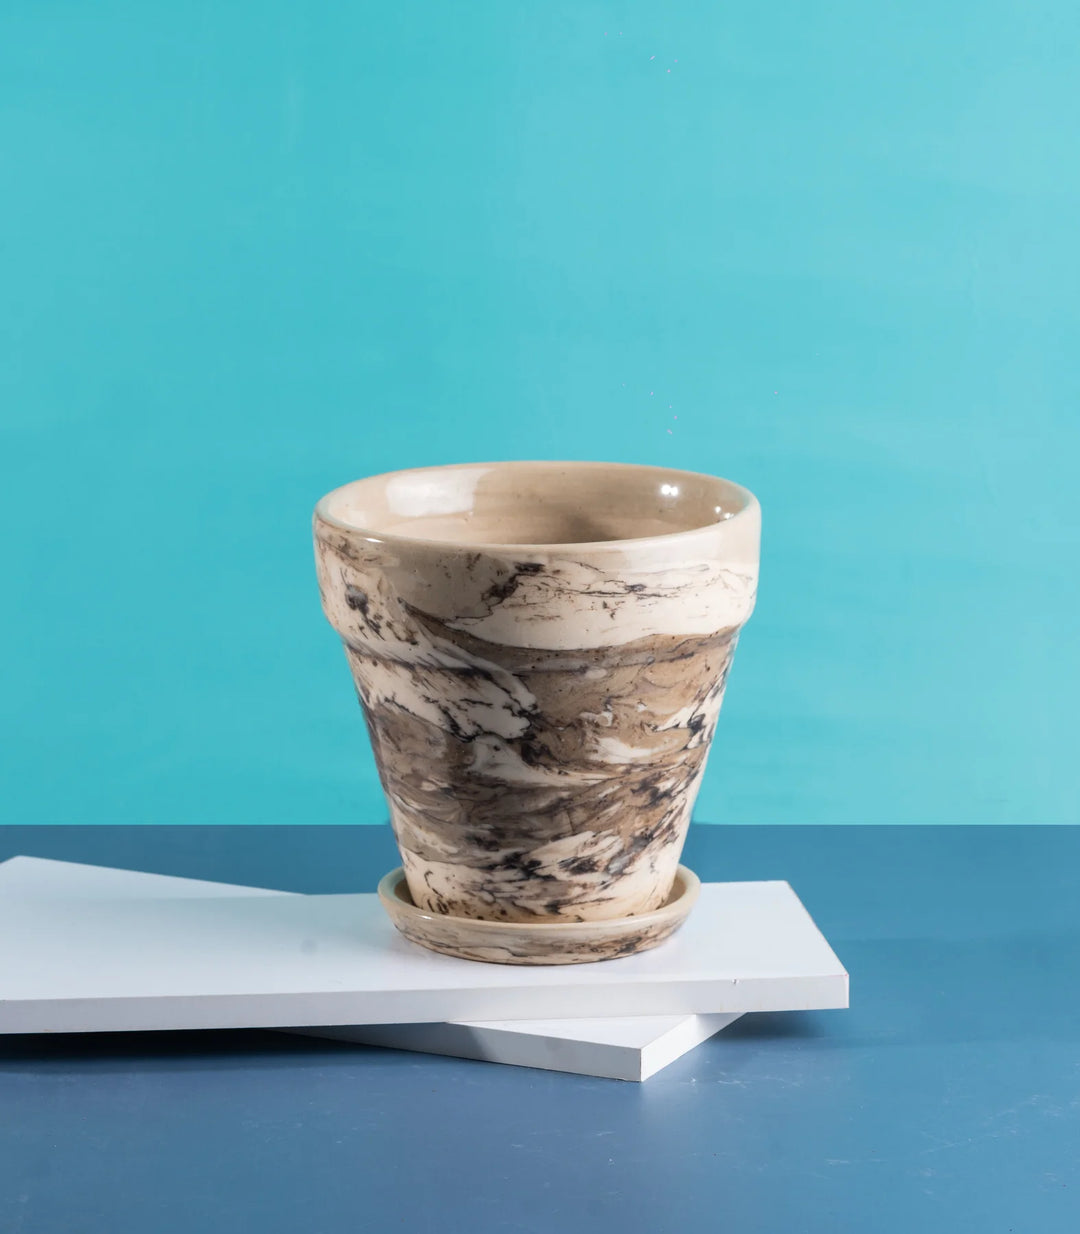 Mystique Ceramic Pots | Decorative 6 Inch Mystique Ceramic Pots